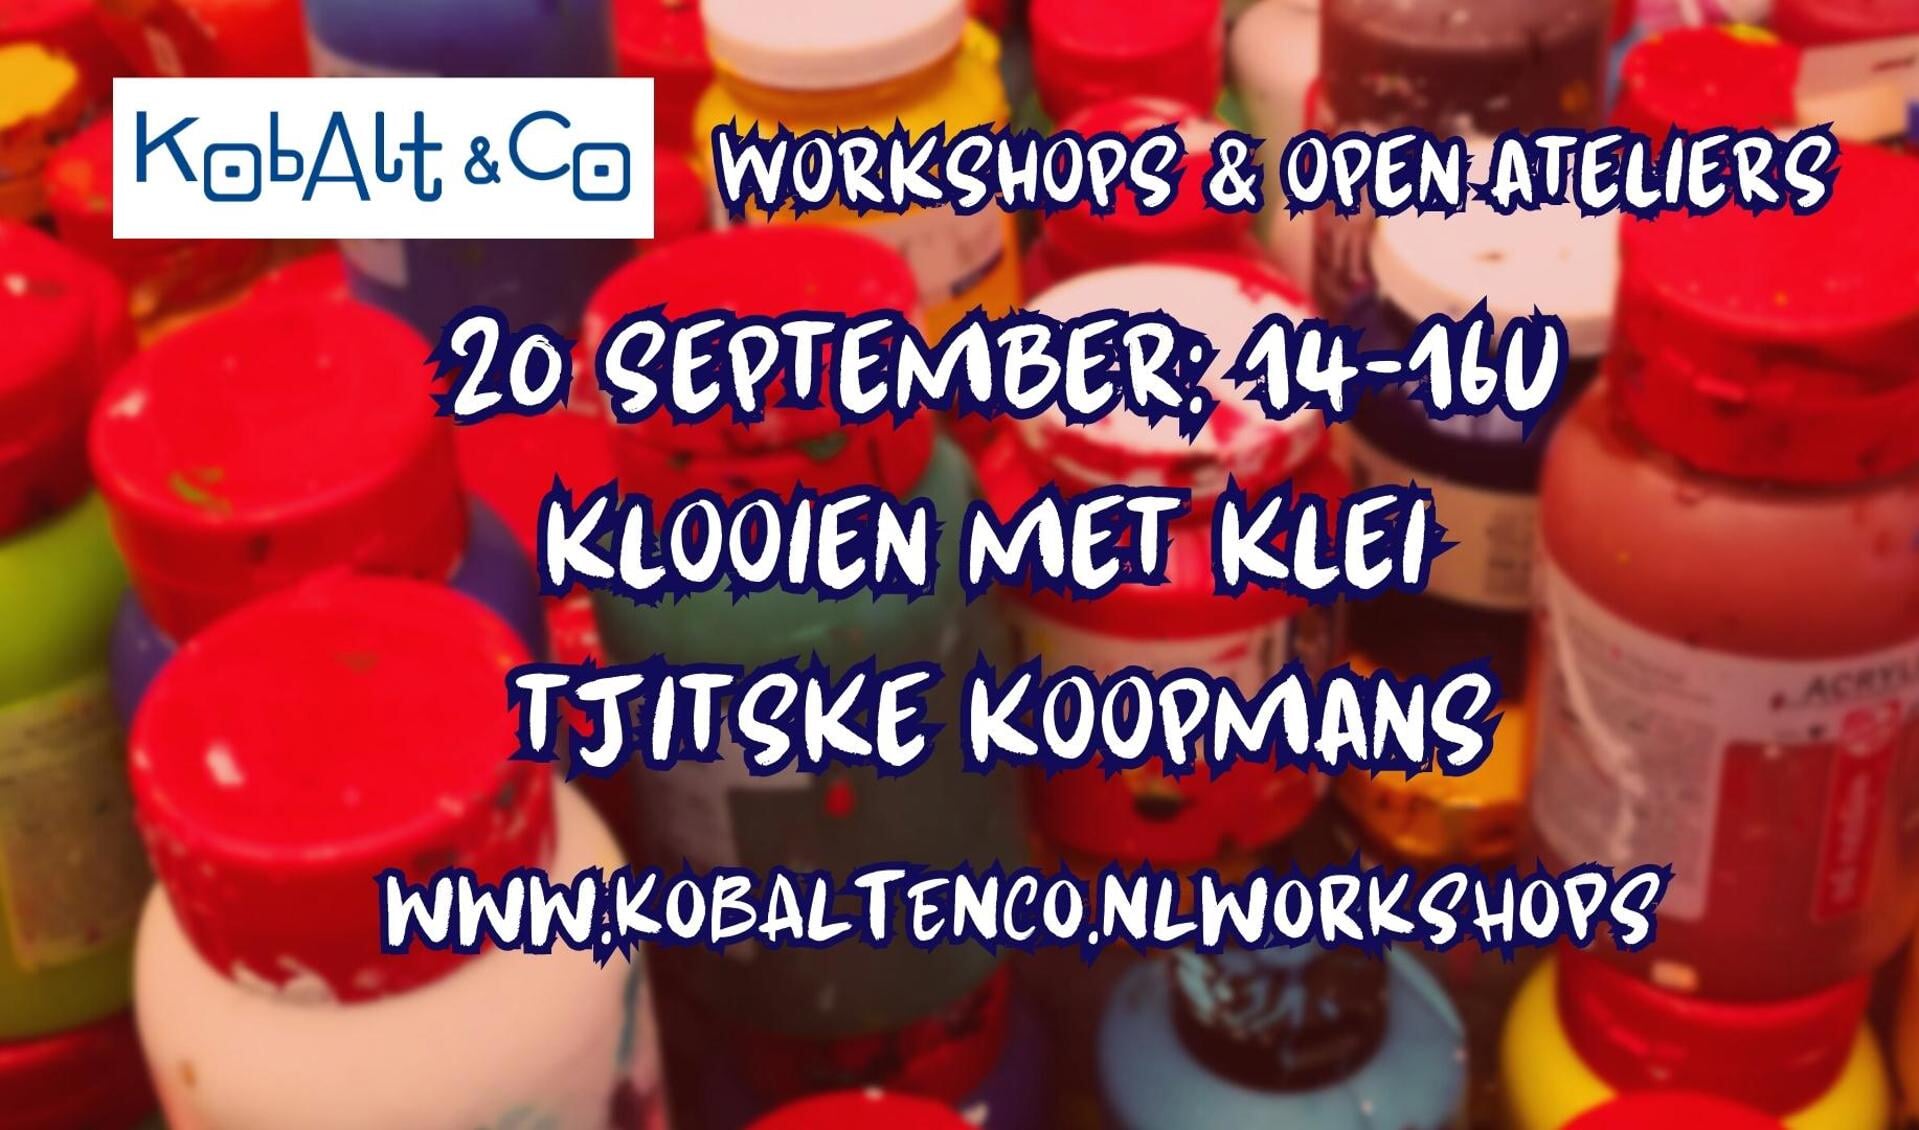 Meer info? www.kobaltenco.nl/workshops